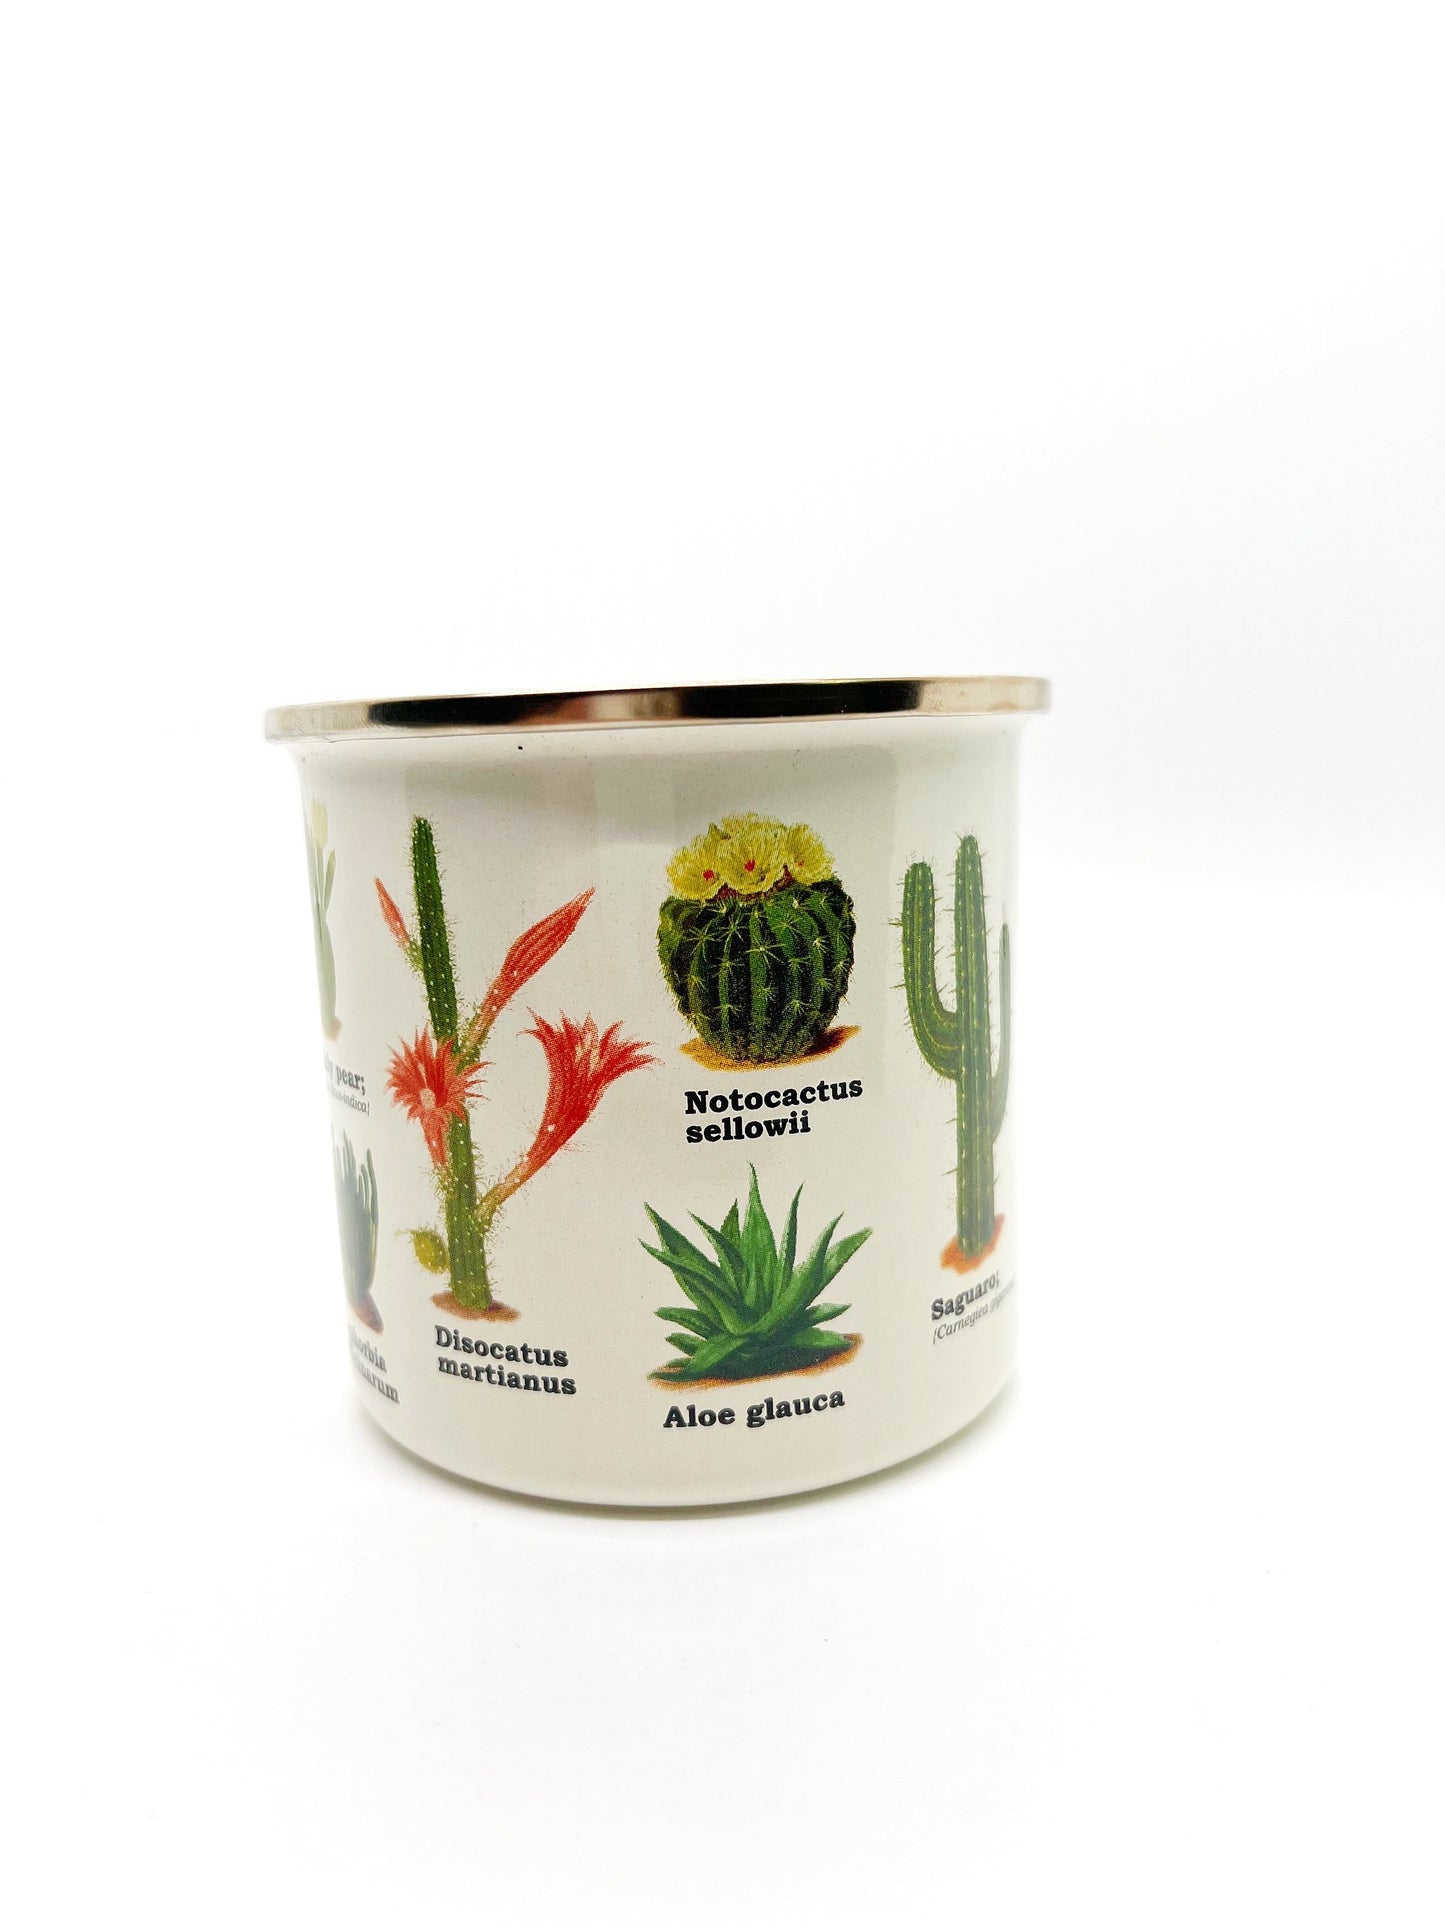 Desert Botanical Enamel Mug